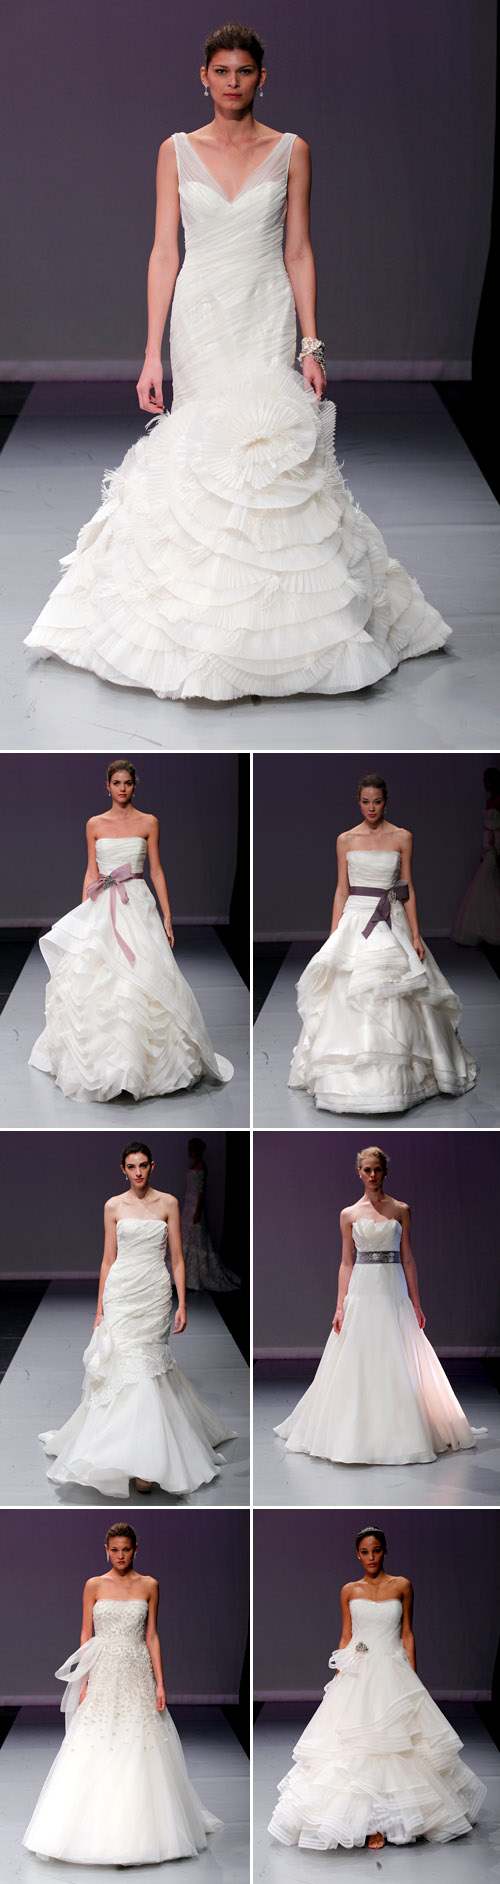 glamorous wedding dresses from Rivini Fall/Winter 2012 bridal market runway show